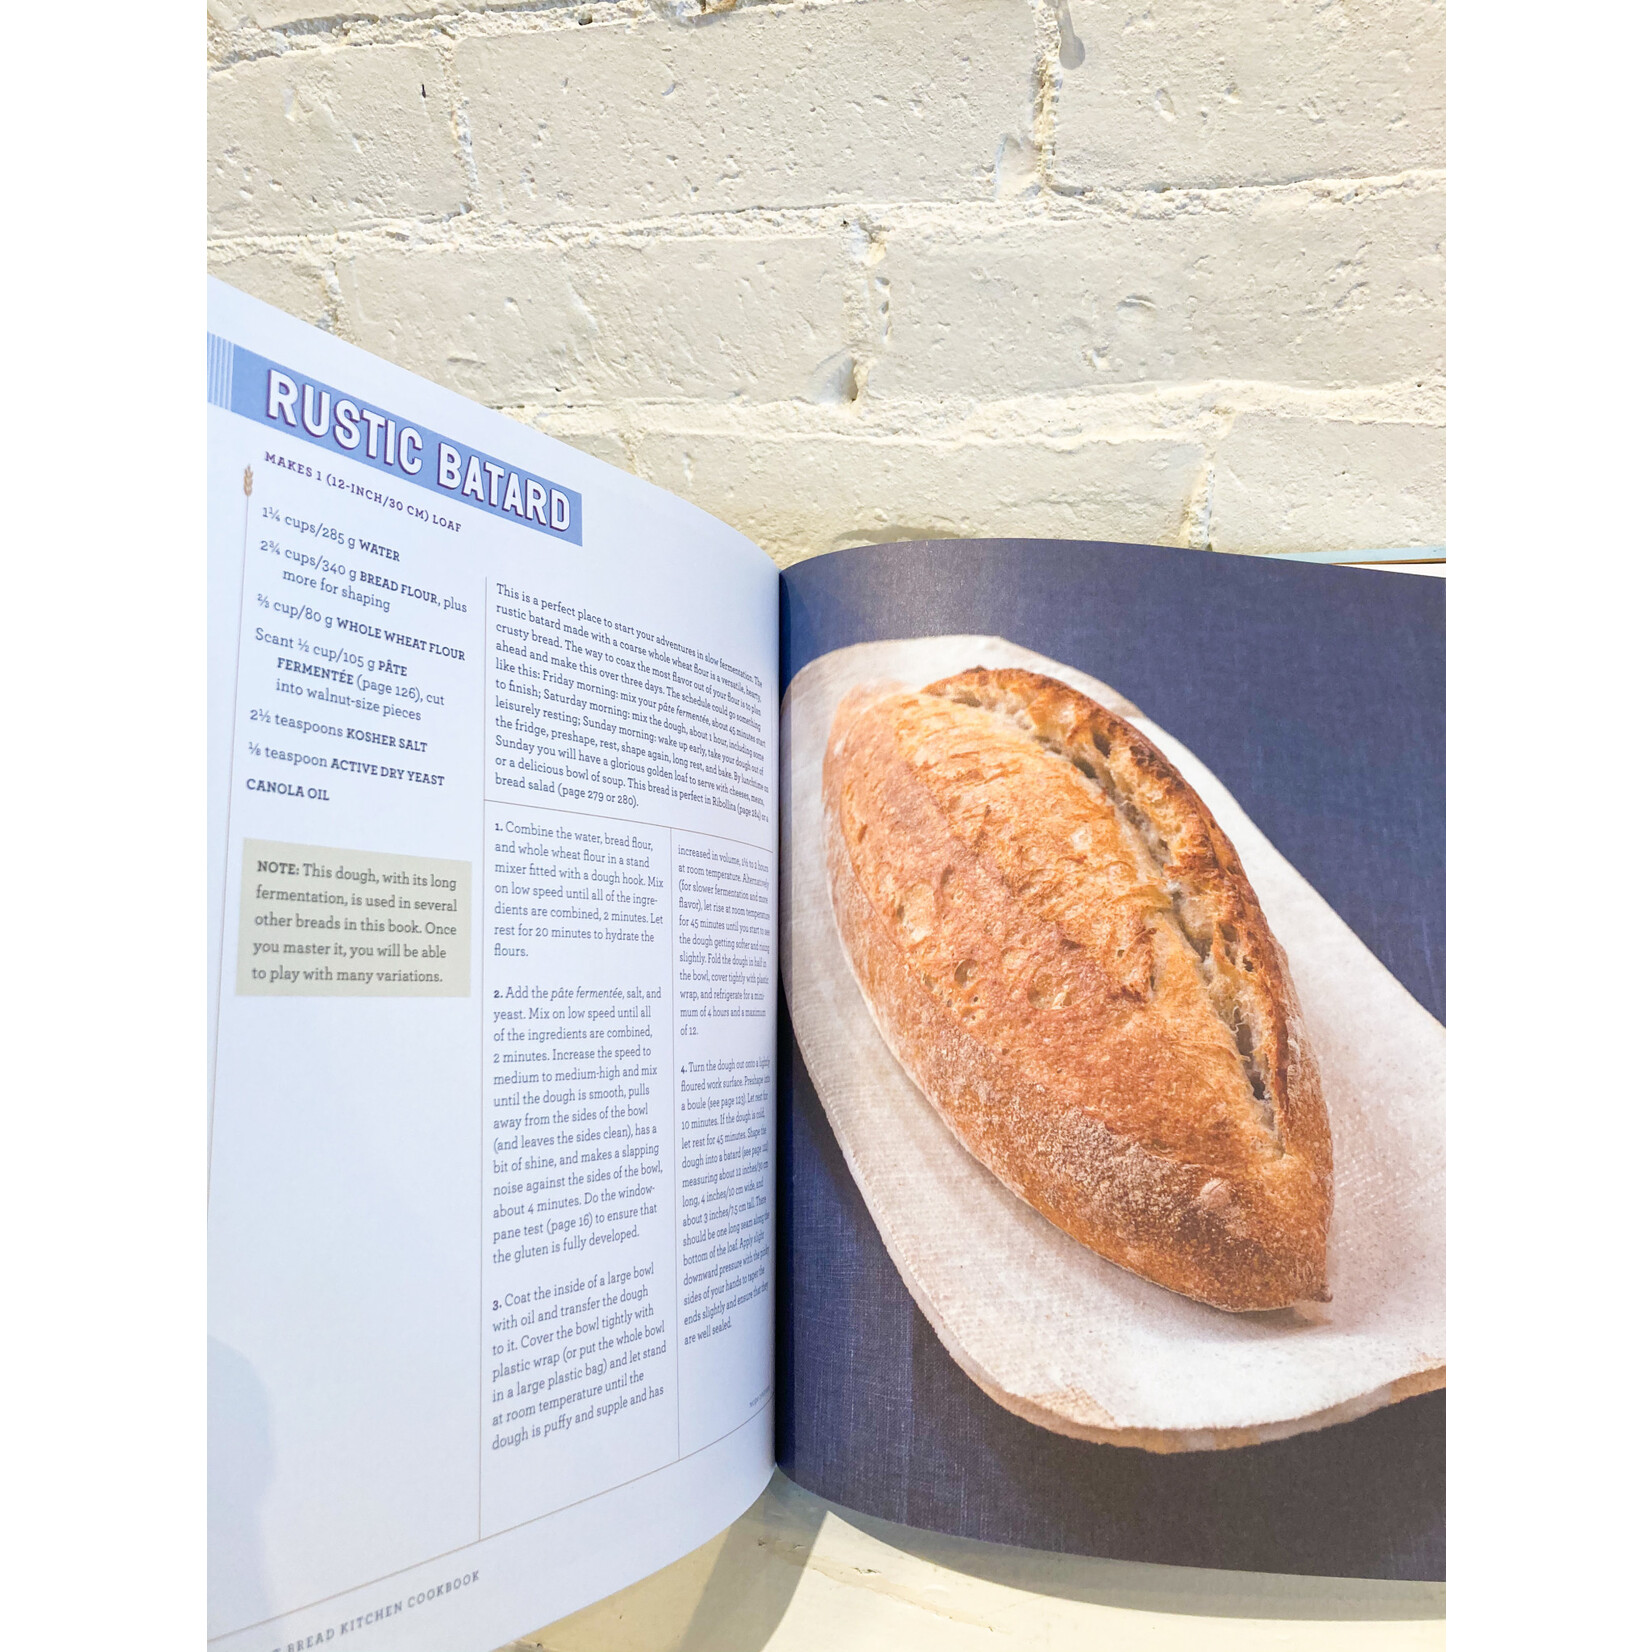 The Hot Bread Kitchen Cookbook by Jessamyn Waldman Rodriguez